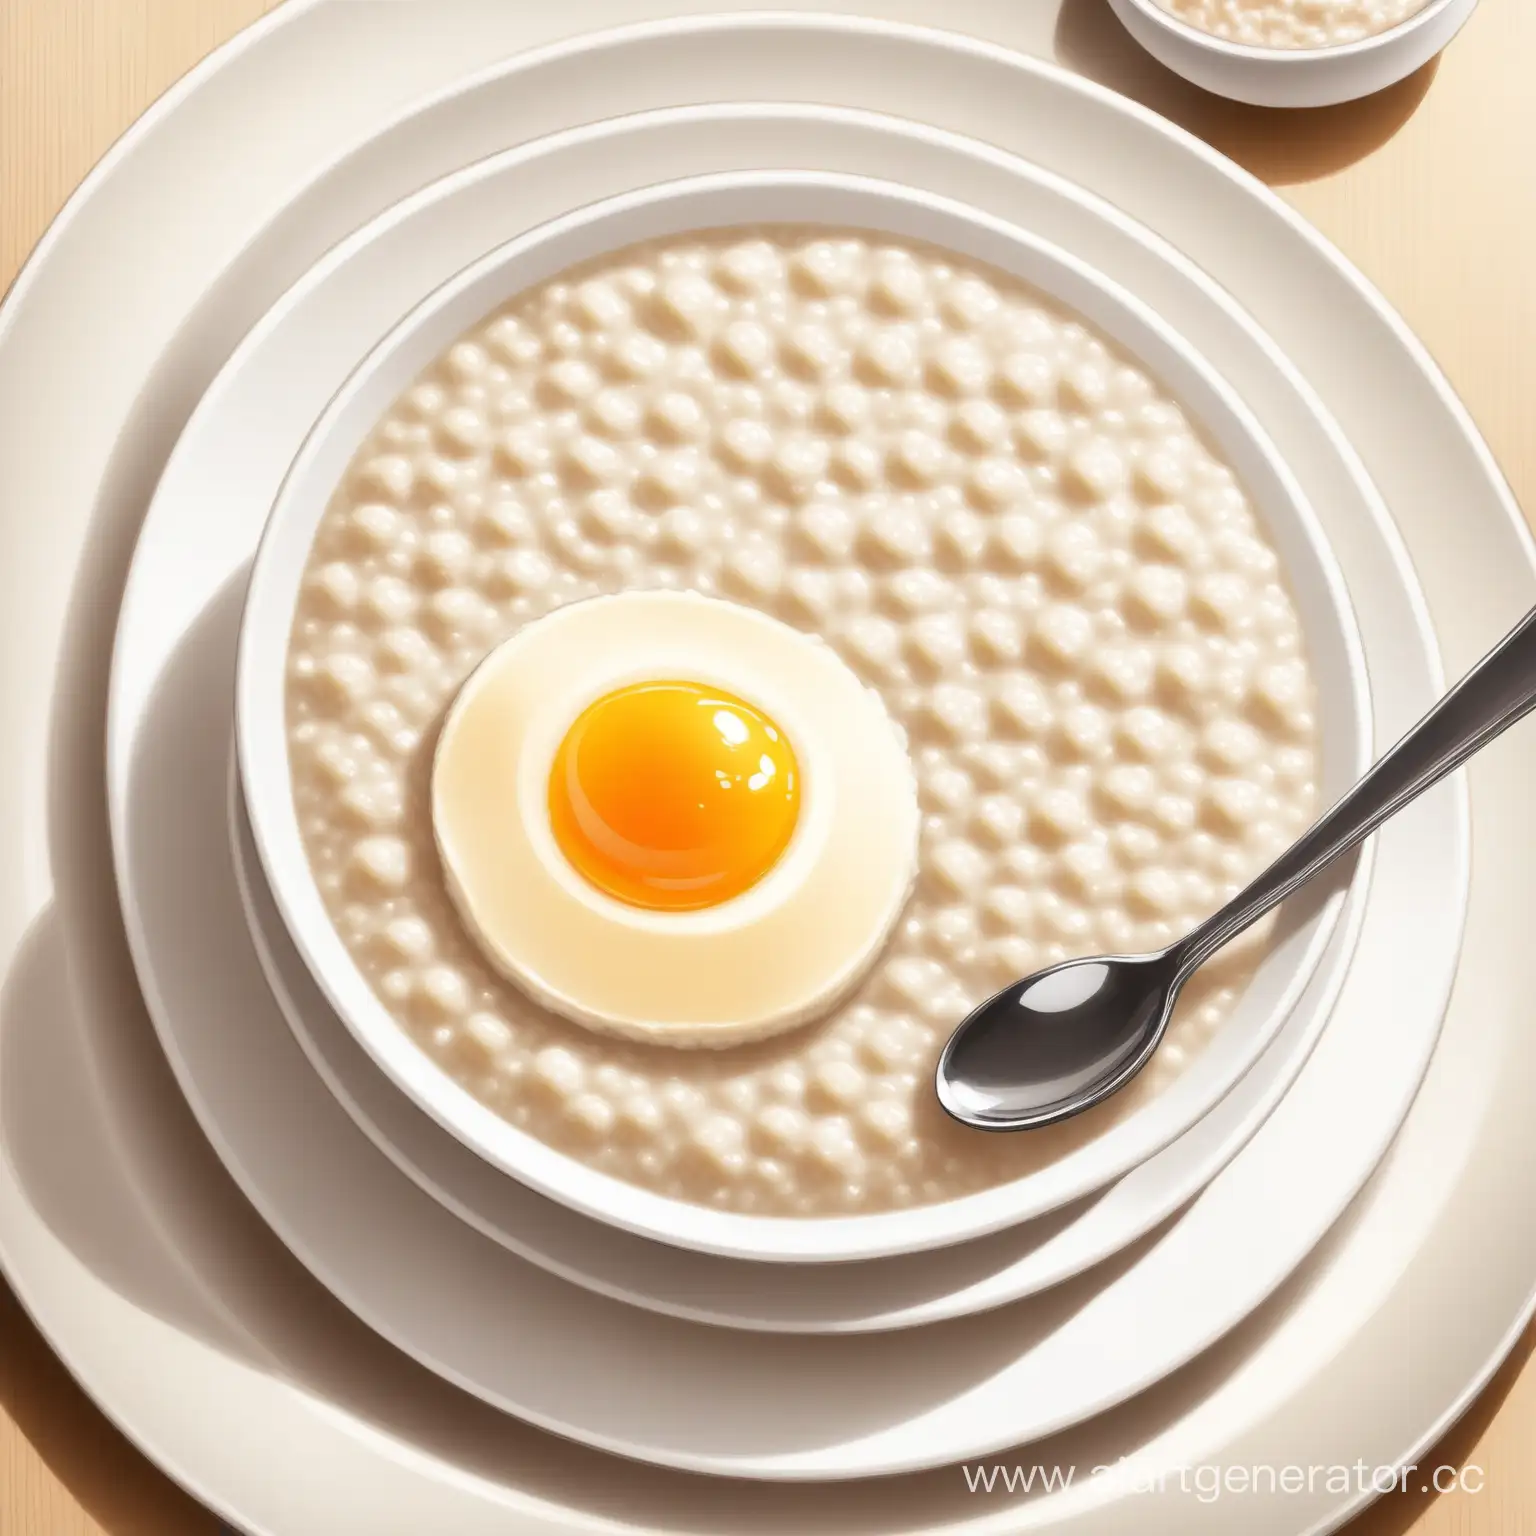 Traditional-Breakfast-Warm-Porridge-with-a-Spoon